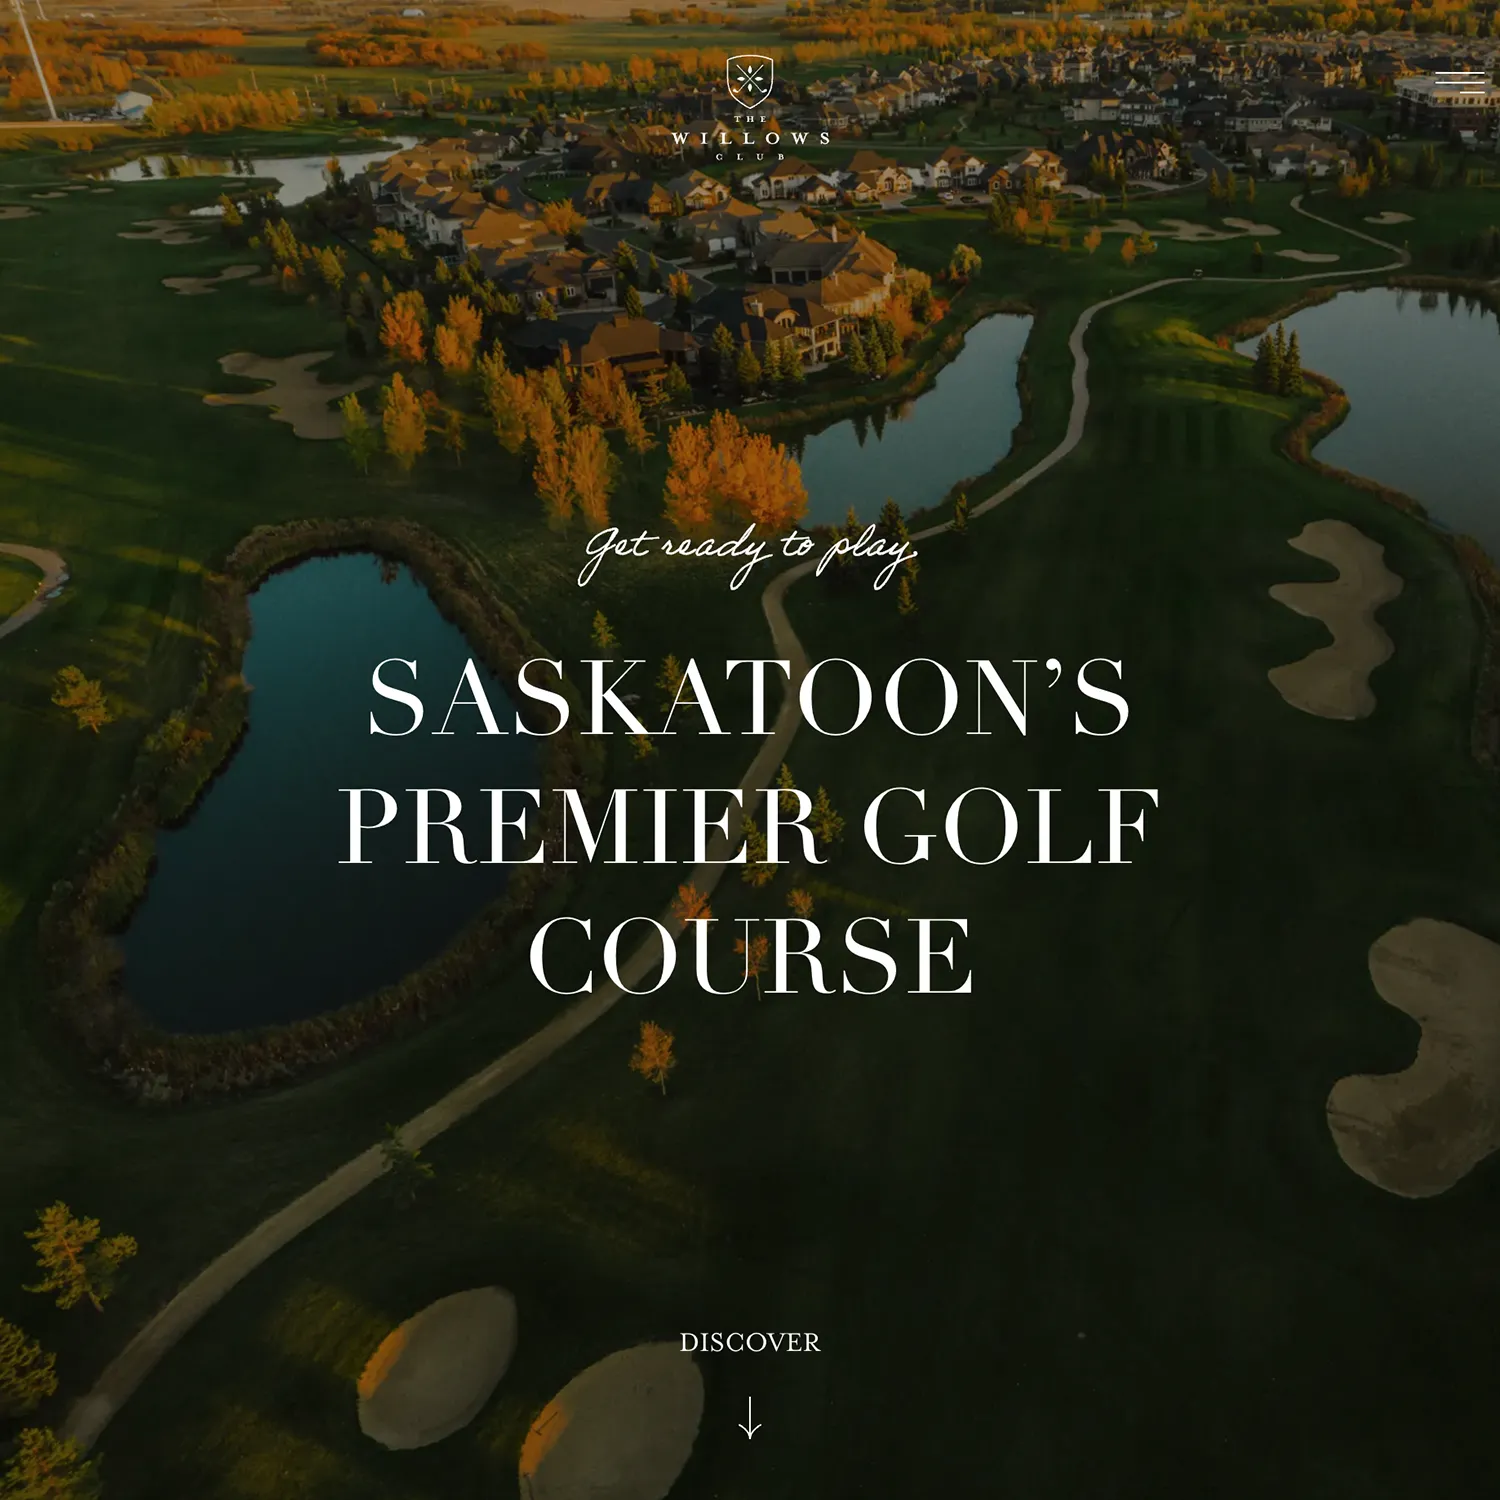 Saskatoon's premier golf course